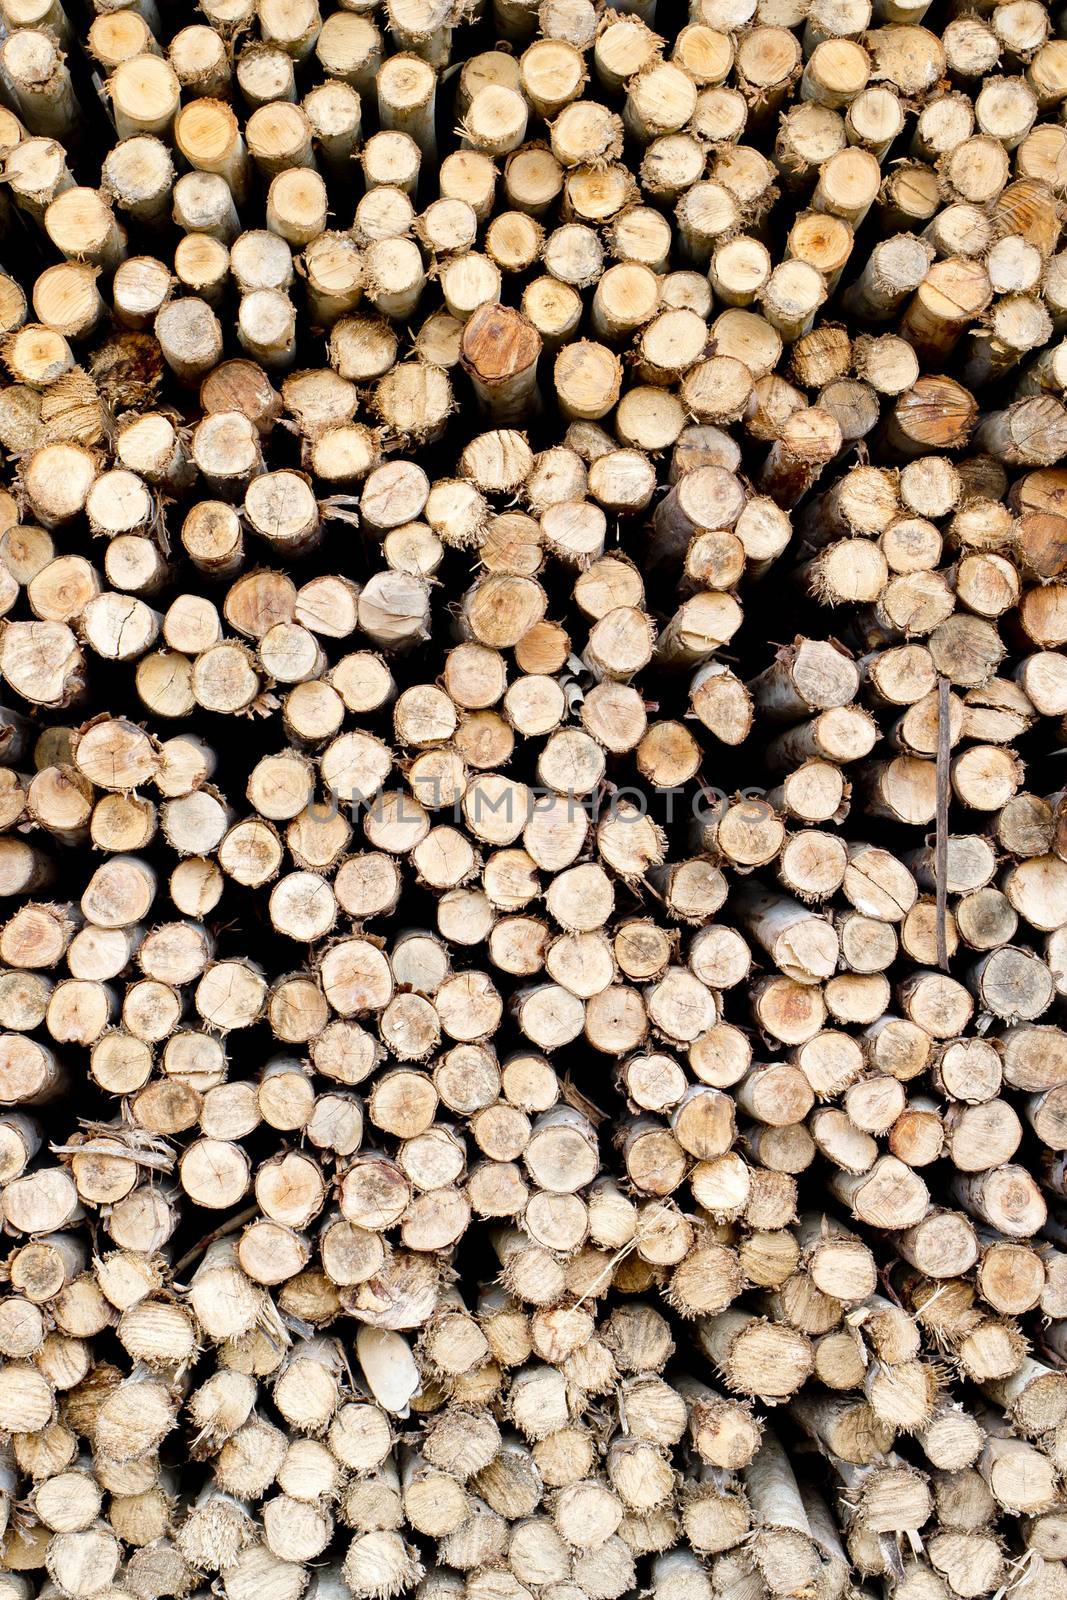 Saw timber prepared for winter heating season